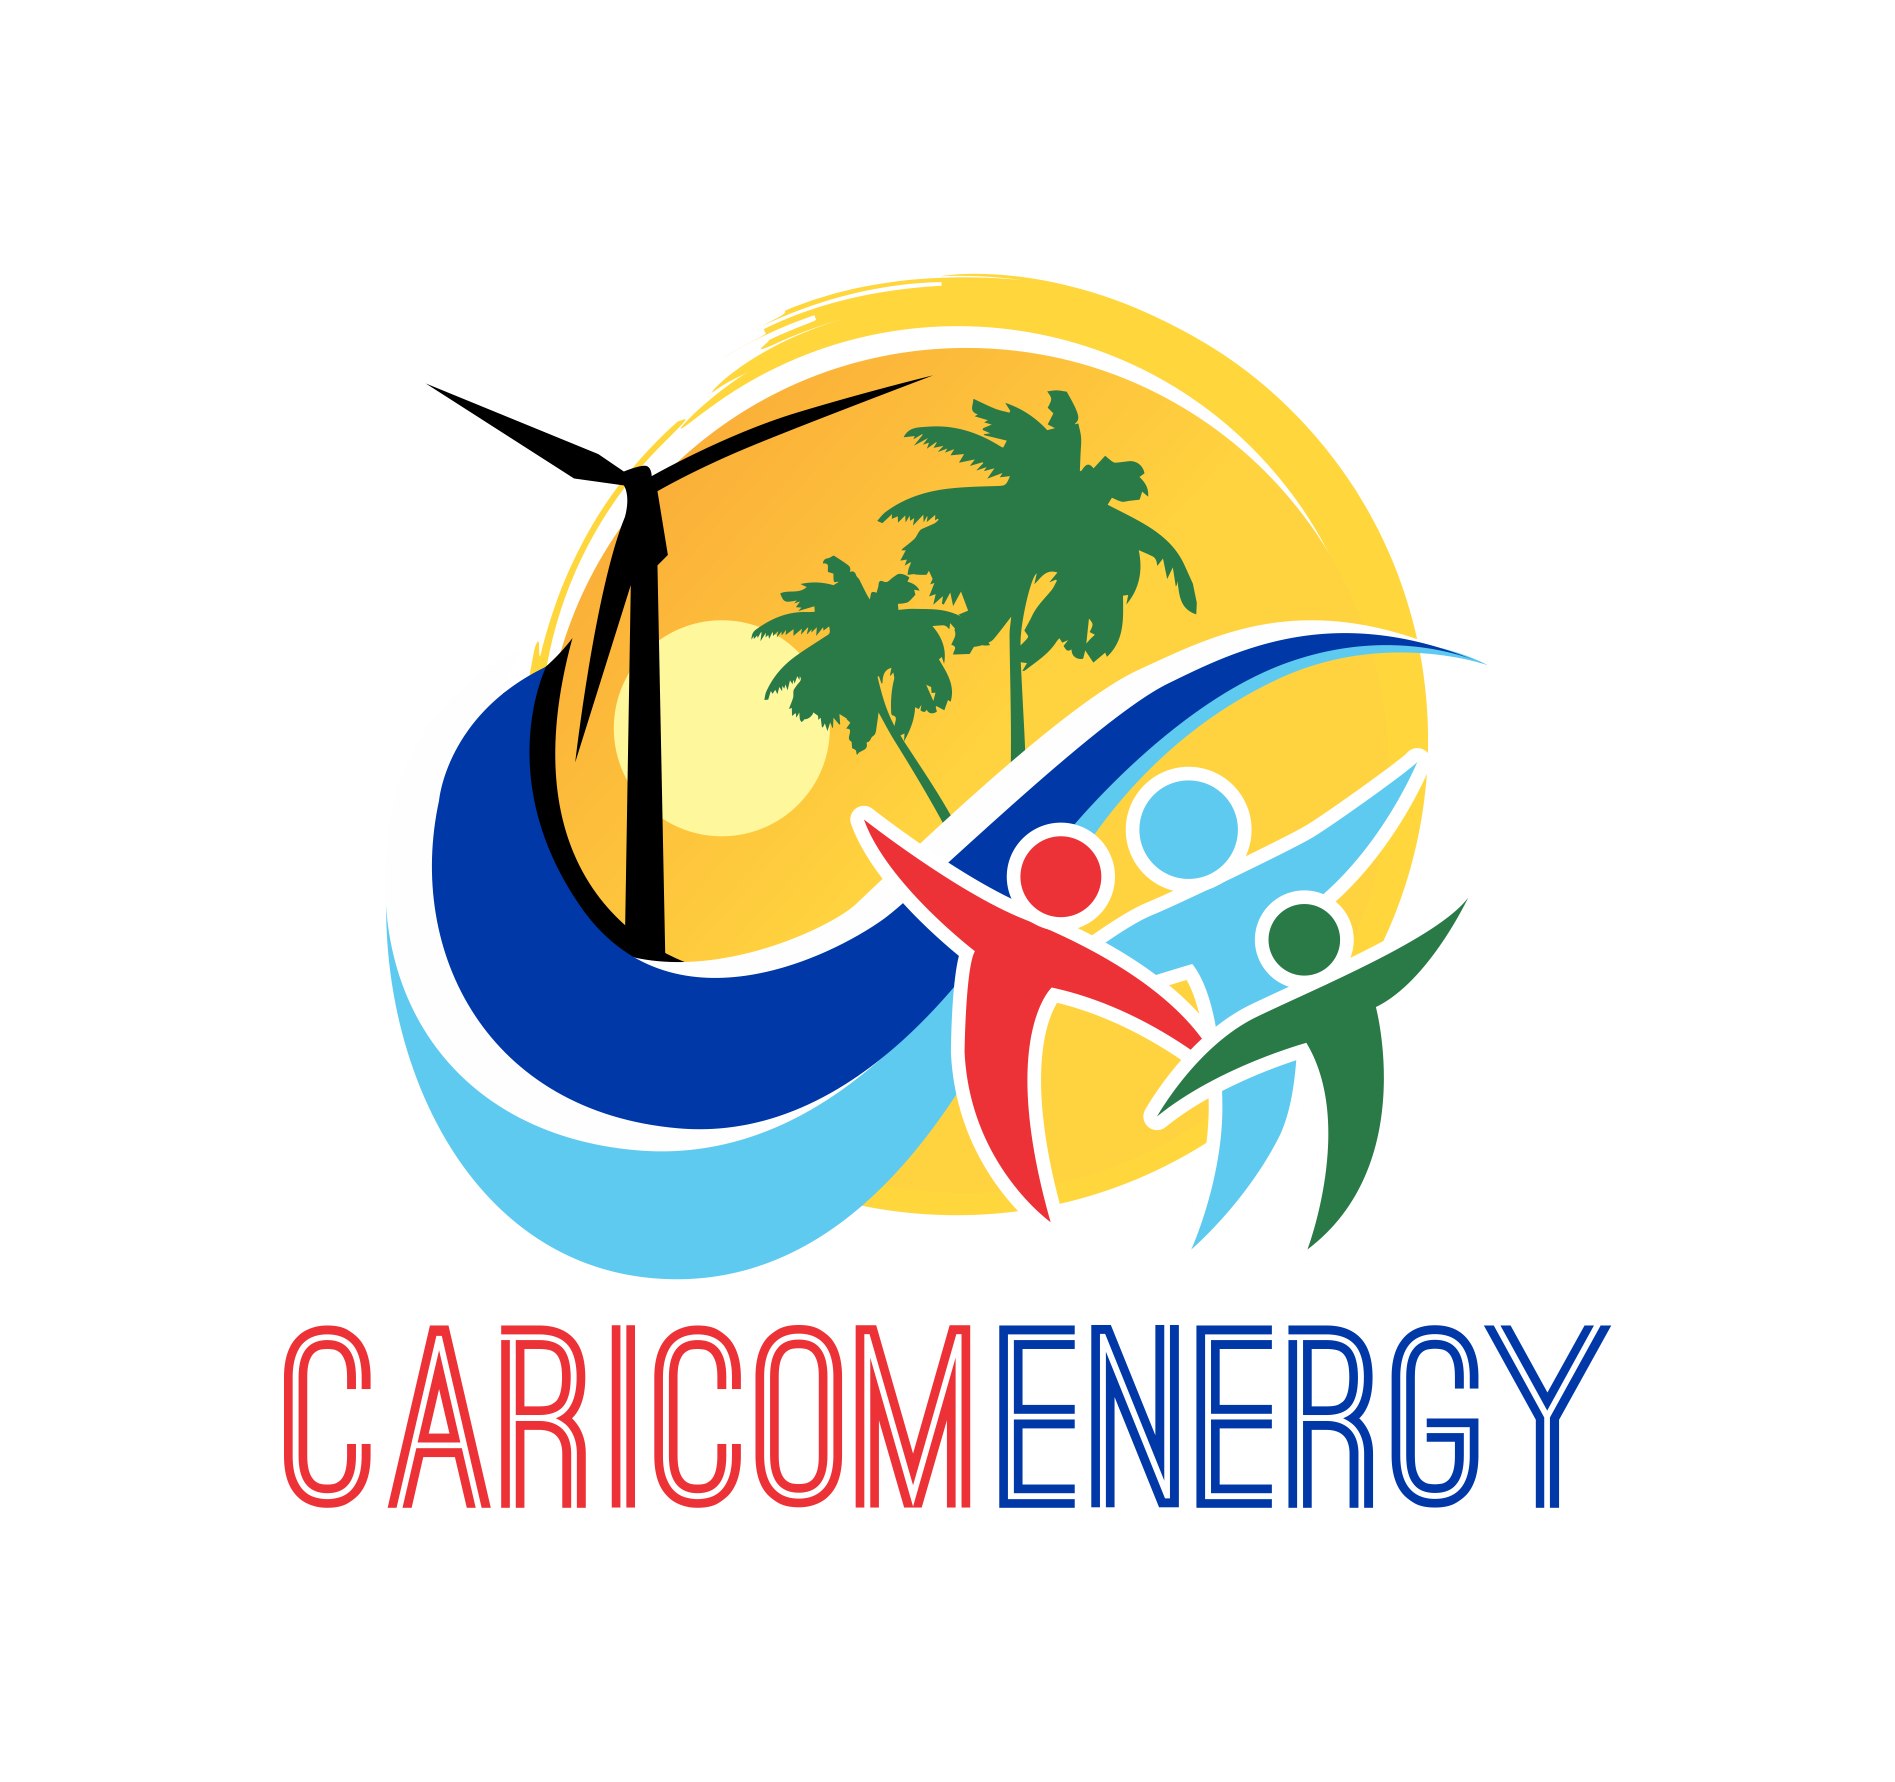 CARICOM Energy